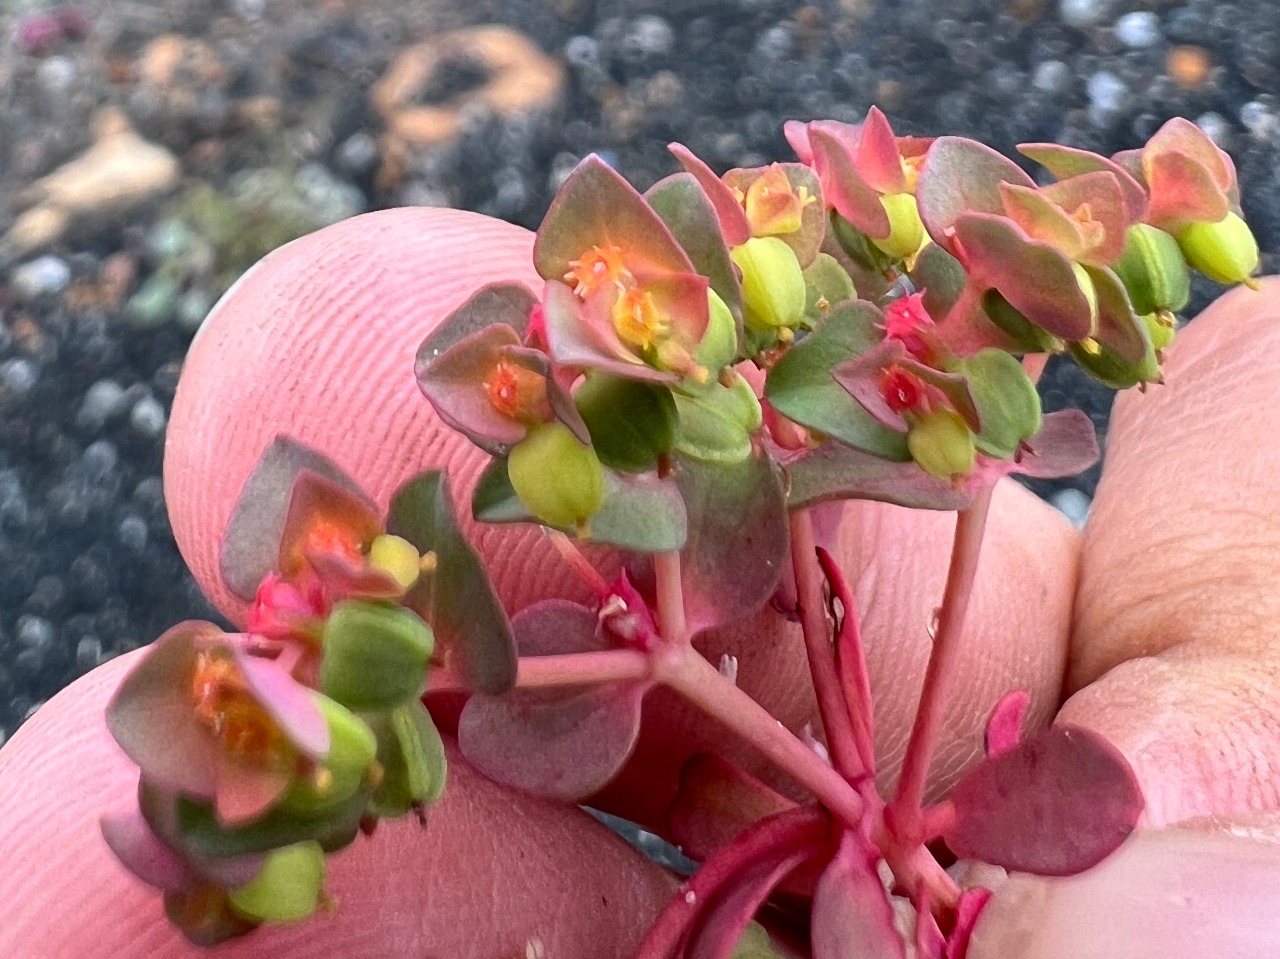 Euphorbia szovitsii